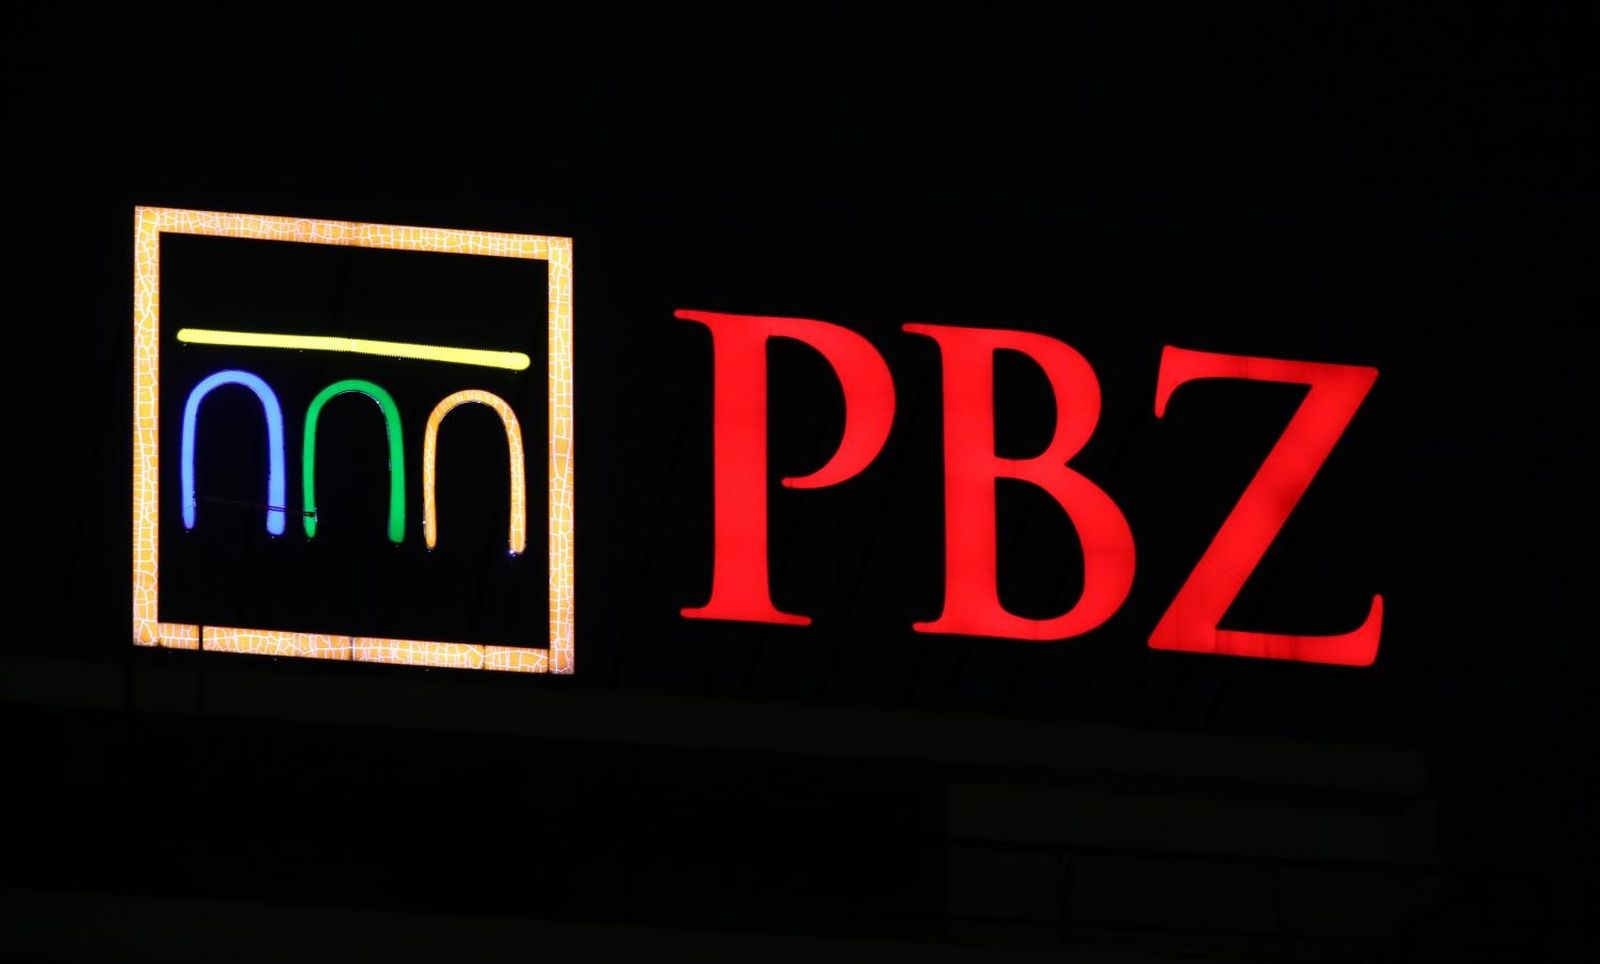 25.08.2015., Split - Svjetleca reklama PBZ-a. 
Photo: Ivo Cagalj/PIXSELL